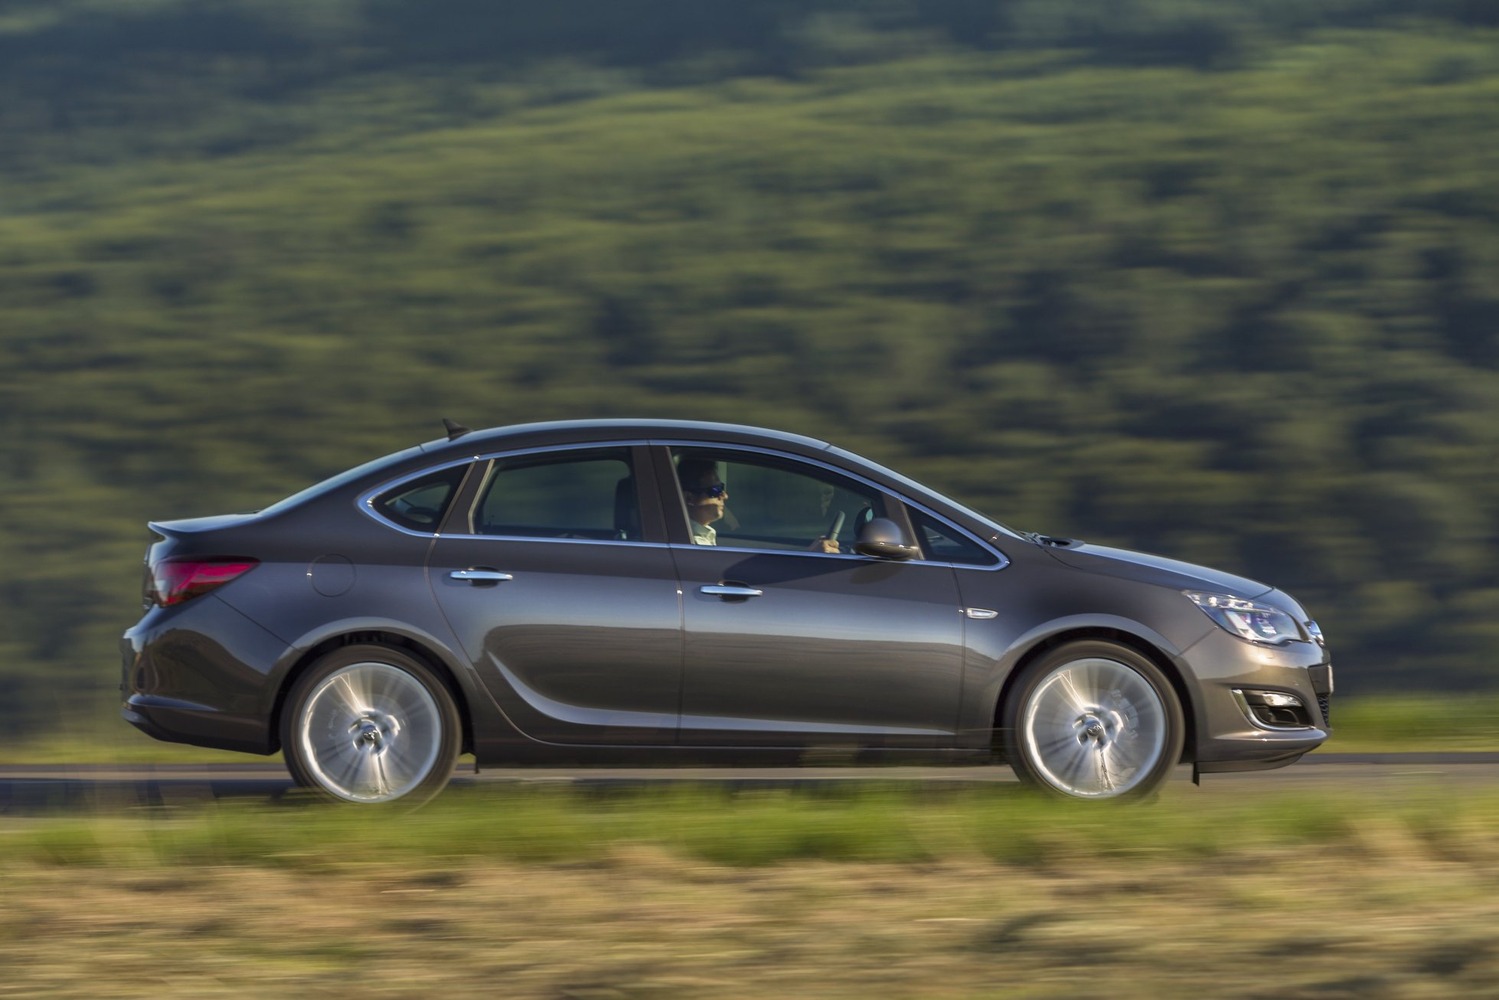 седан Opel Astra 2012 - 2016г выпуска модификация 1.2 MT (95 л.с.)